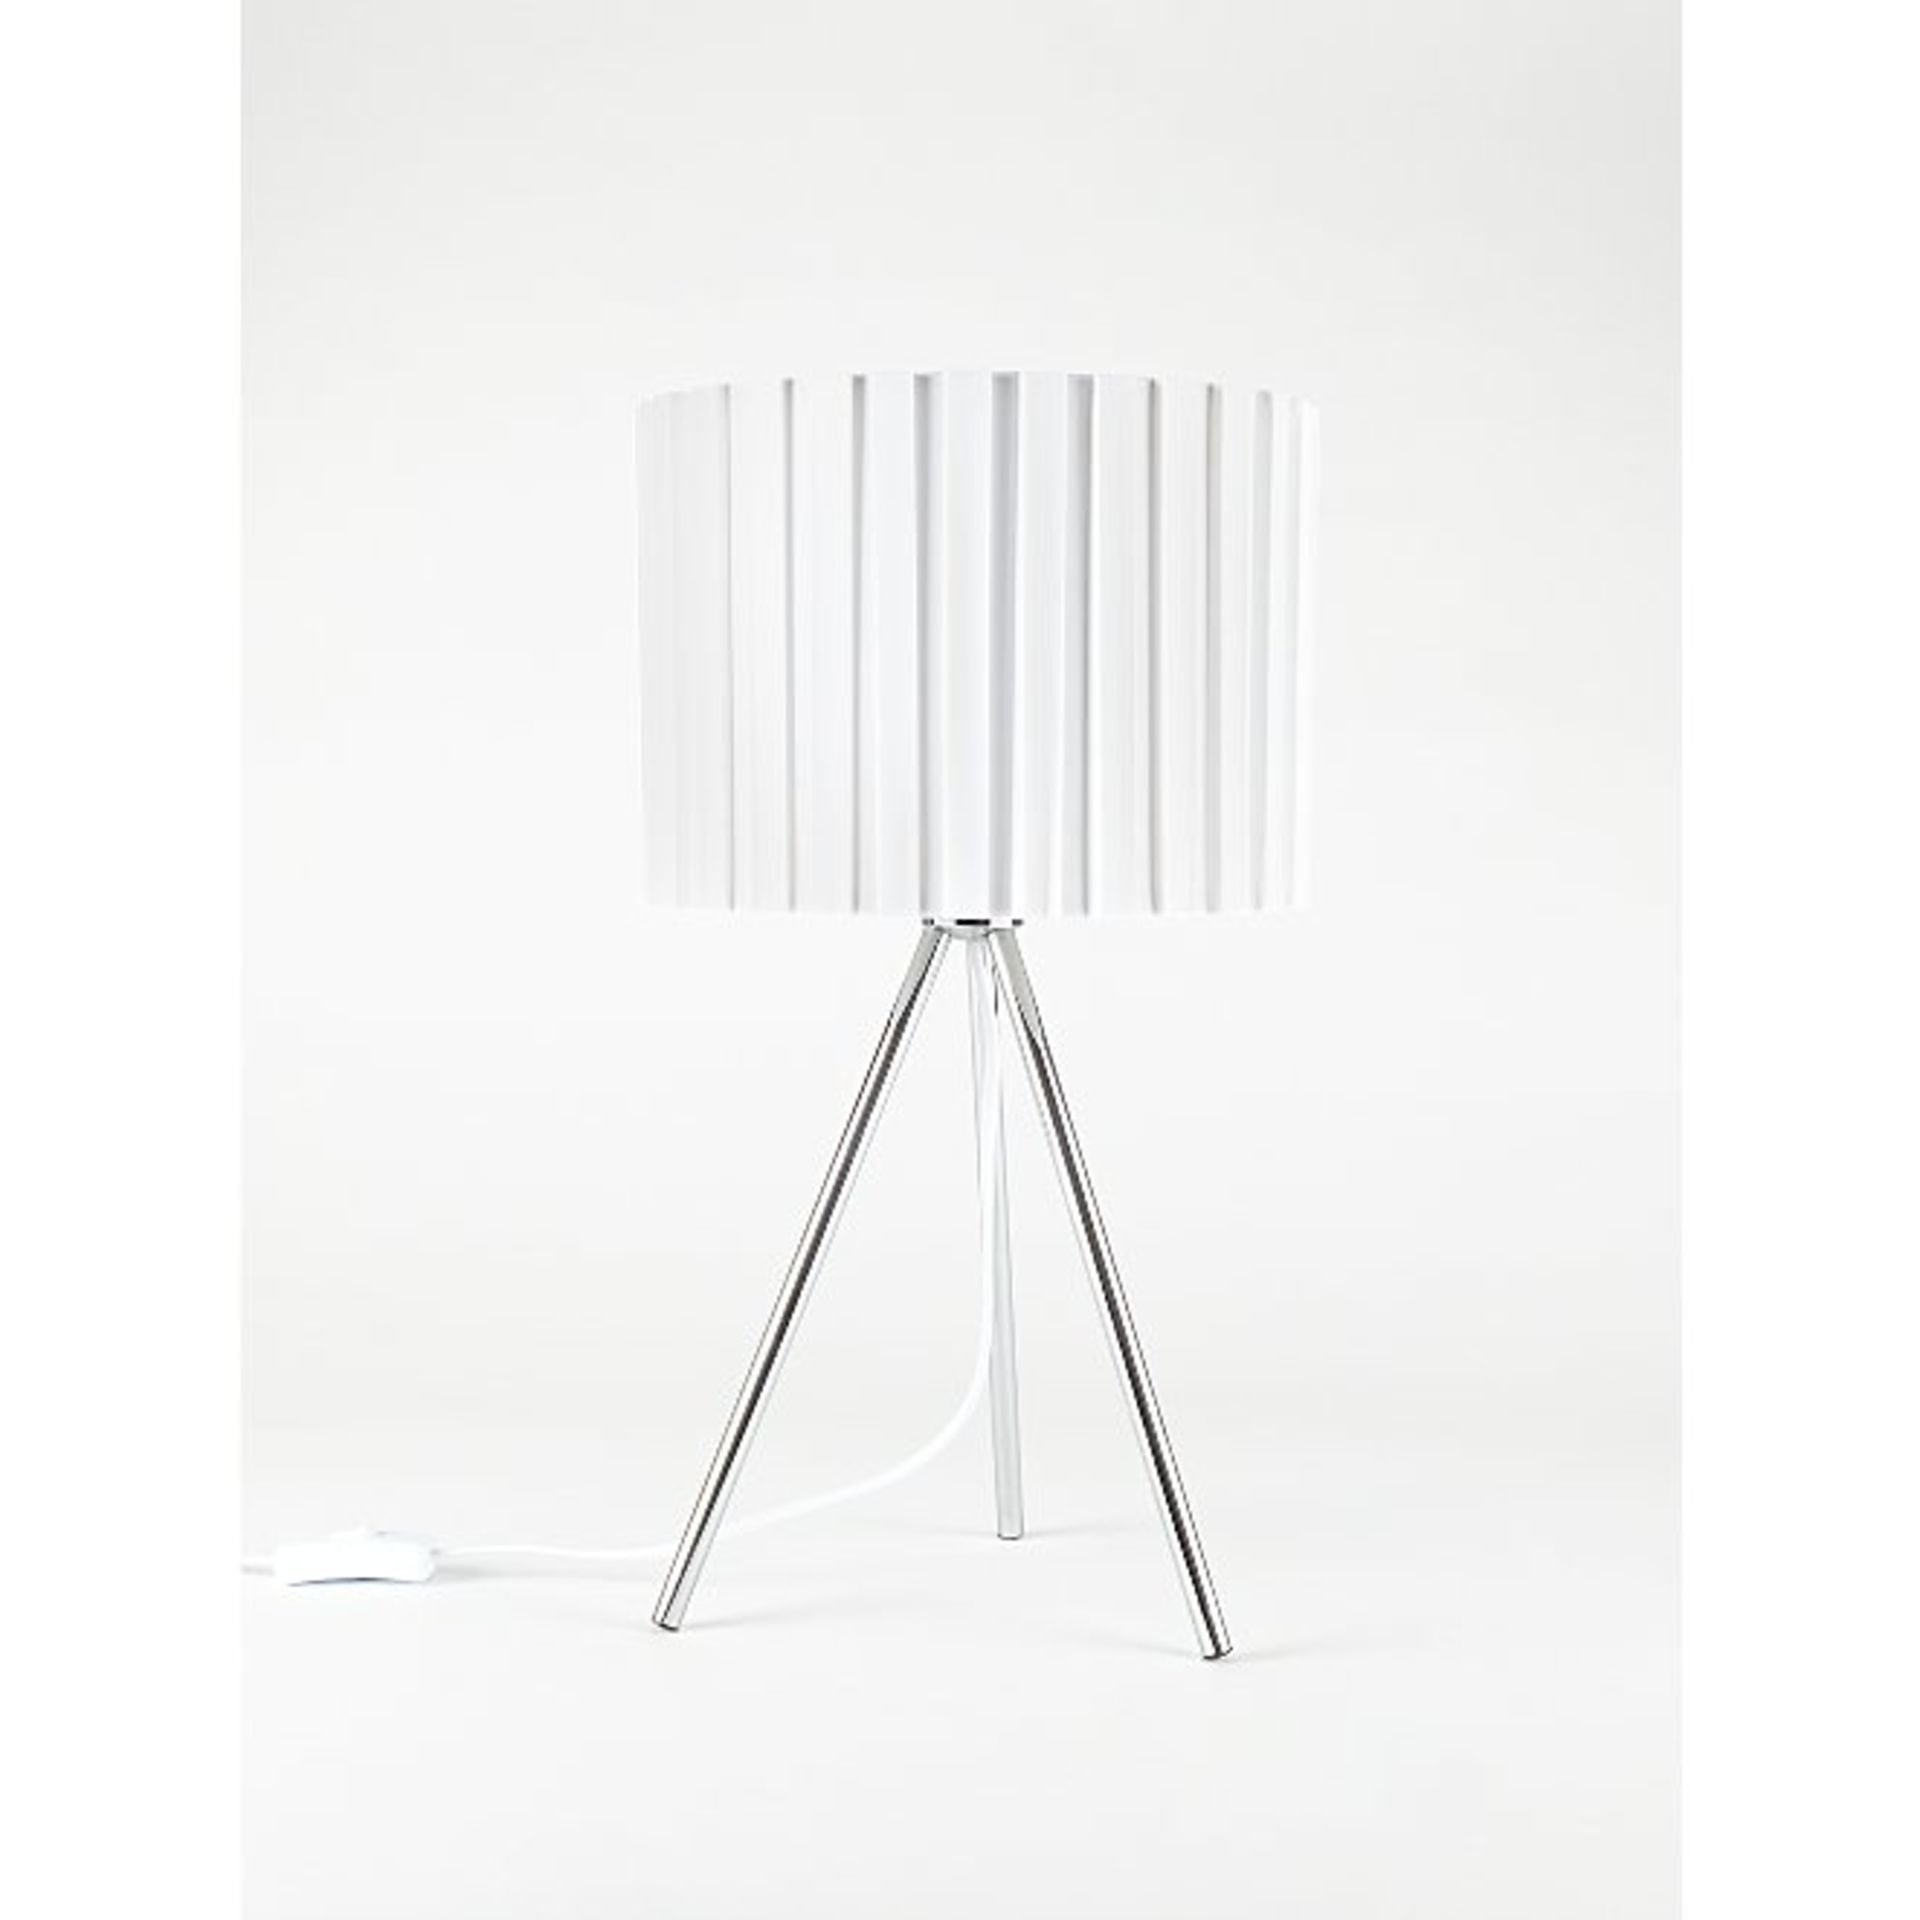 (R6O) Lighting. 4 Items. 2x Bamboo Floor Lamp & 2x Metal Tripod Table Lamp - Image 2 of 3